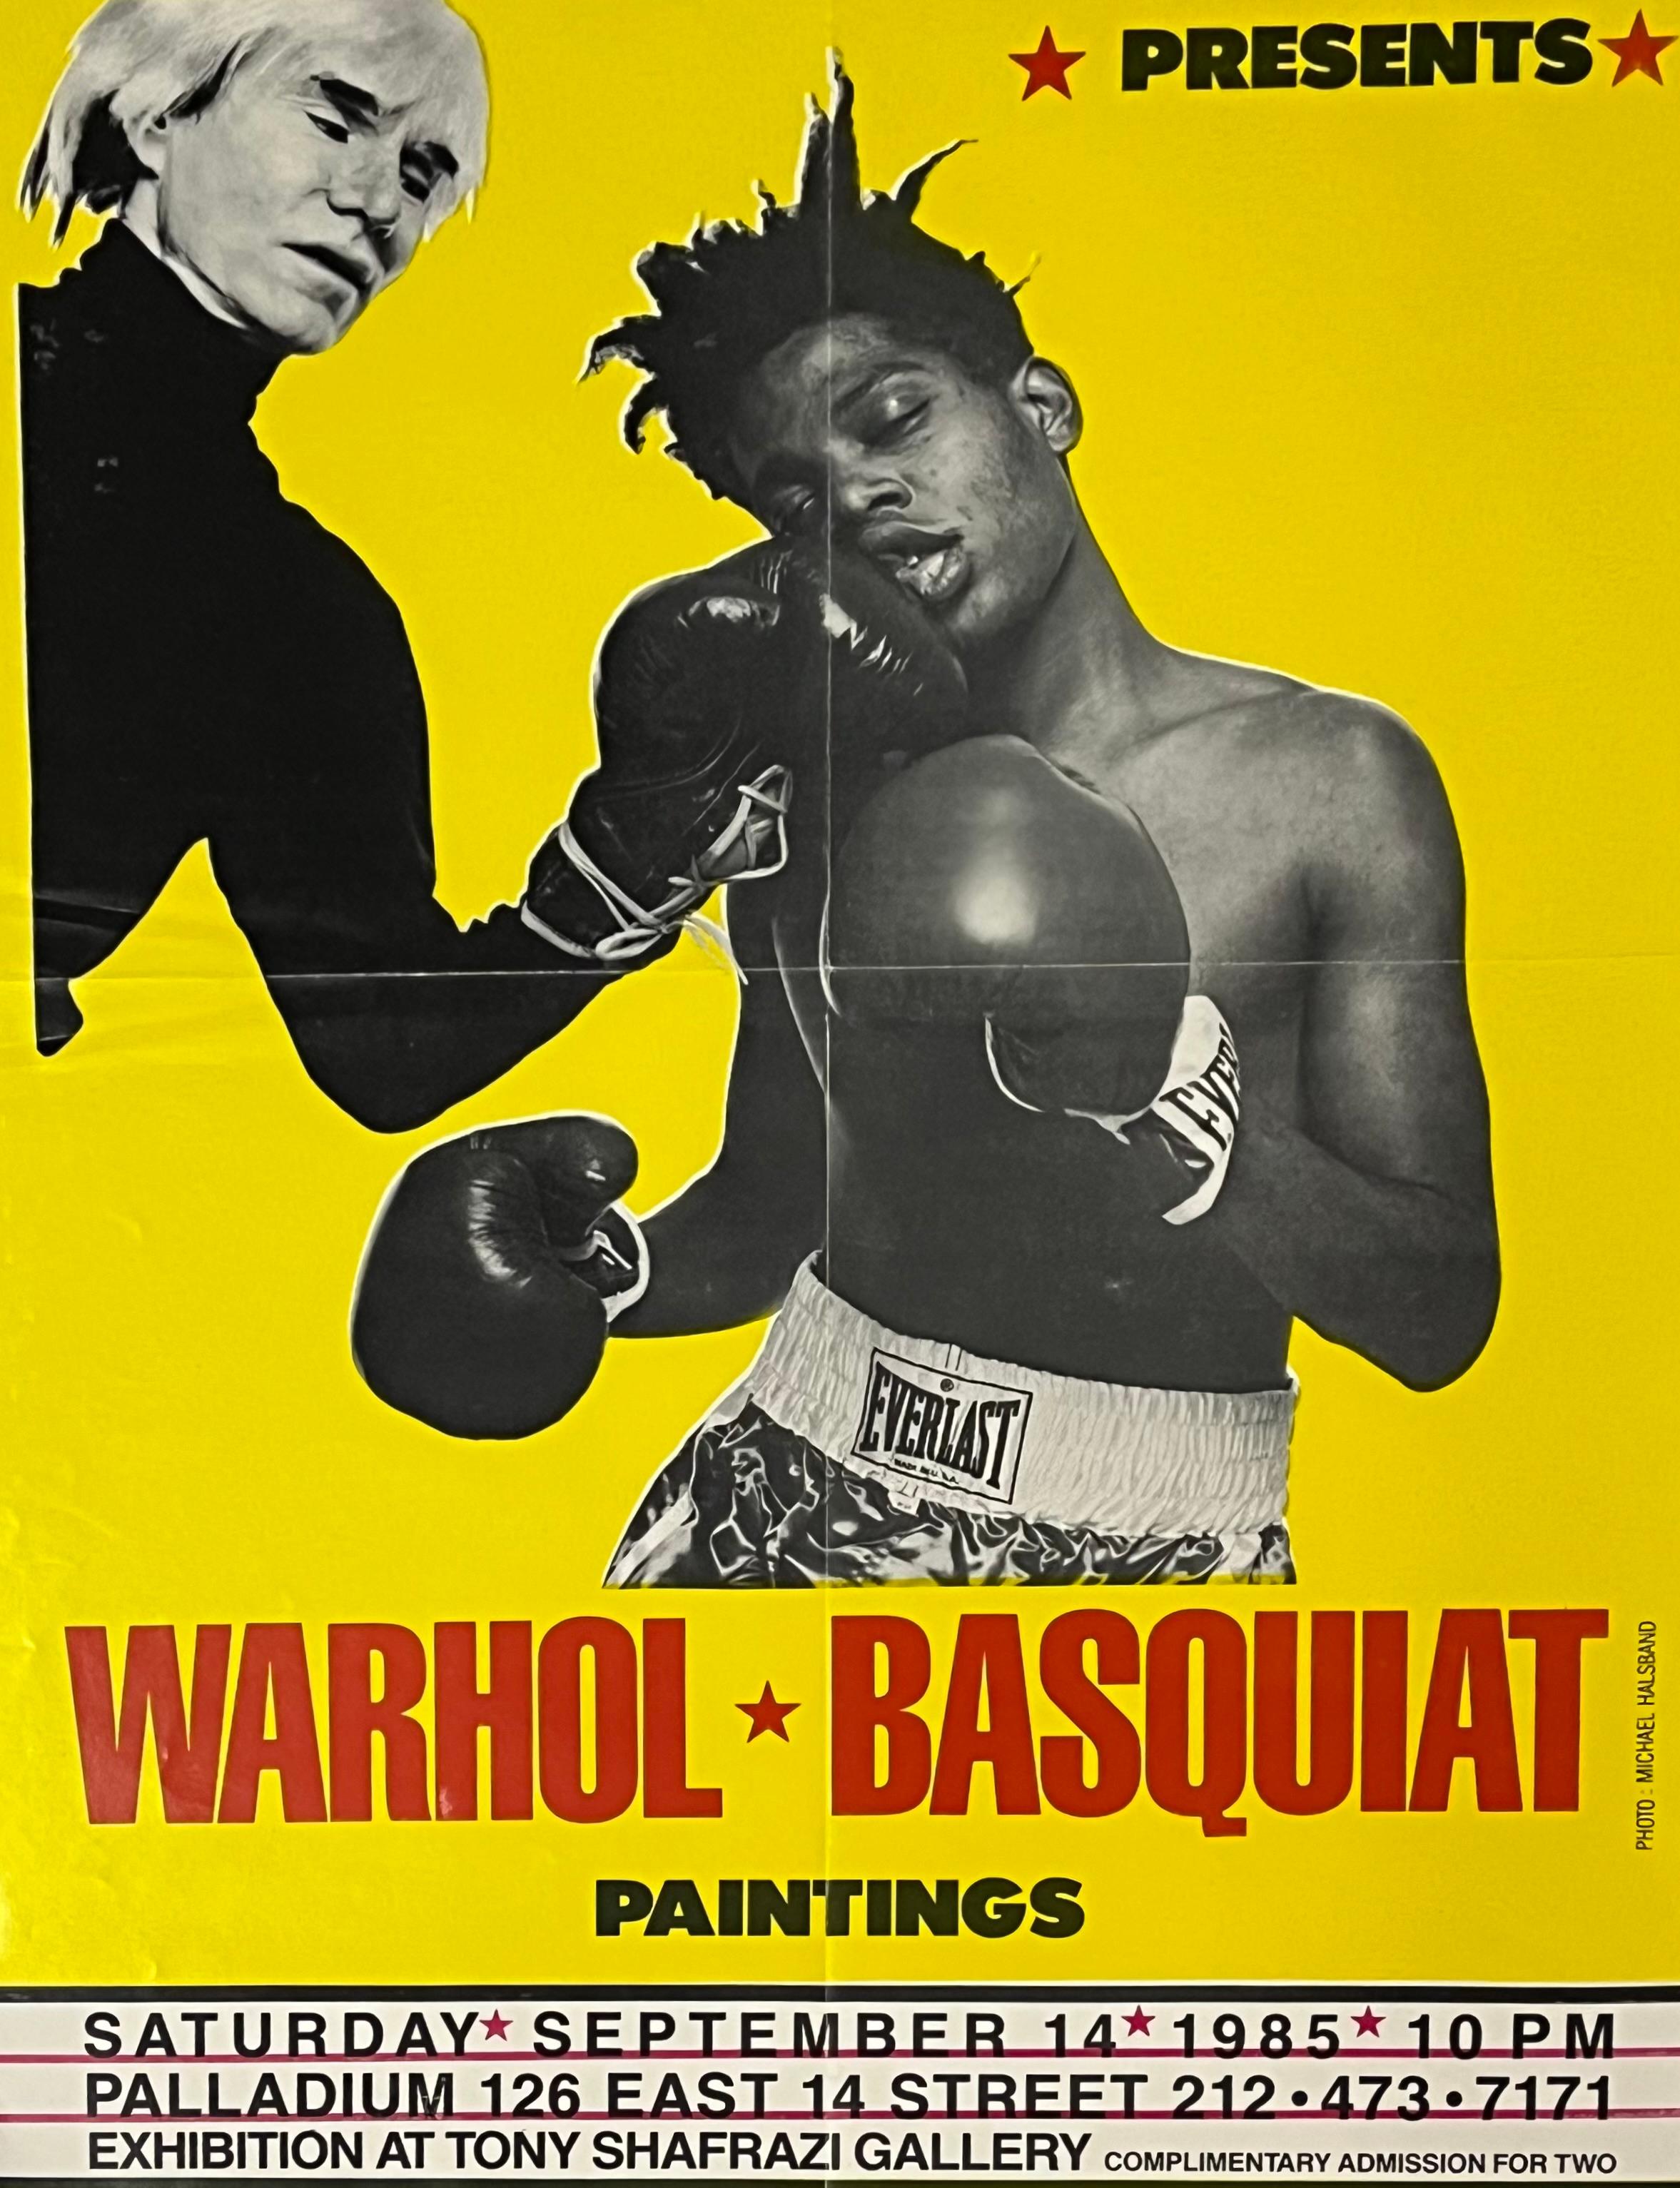 Warhol Basquiat Boxing Posters 1985 (Basquiat Warhol boxing 1985 set of 2) - Pop Art Print by Michael Halsband